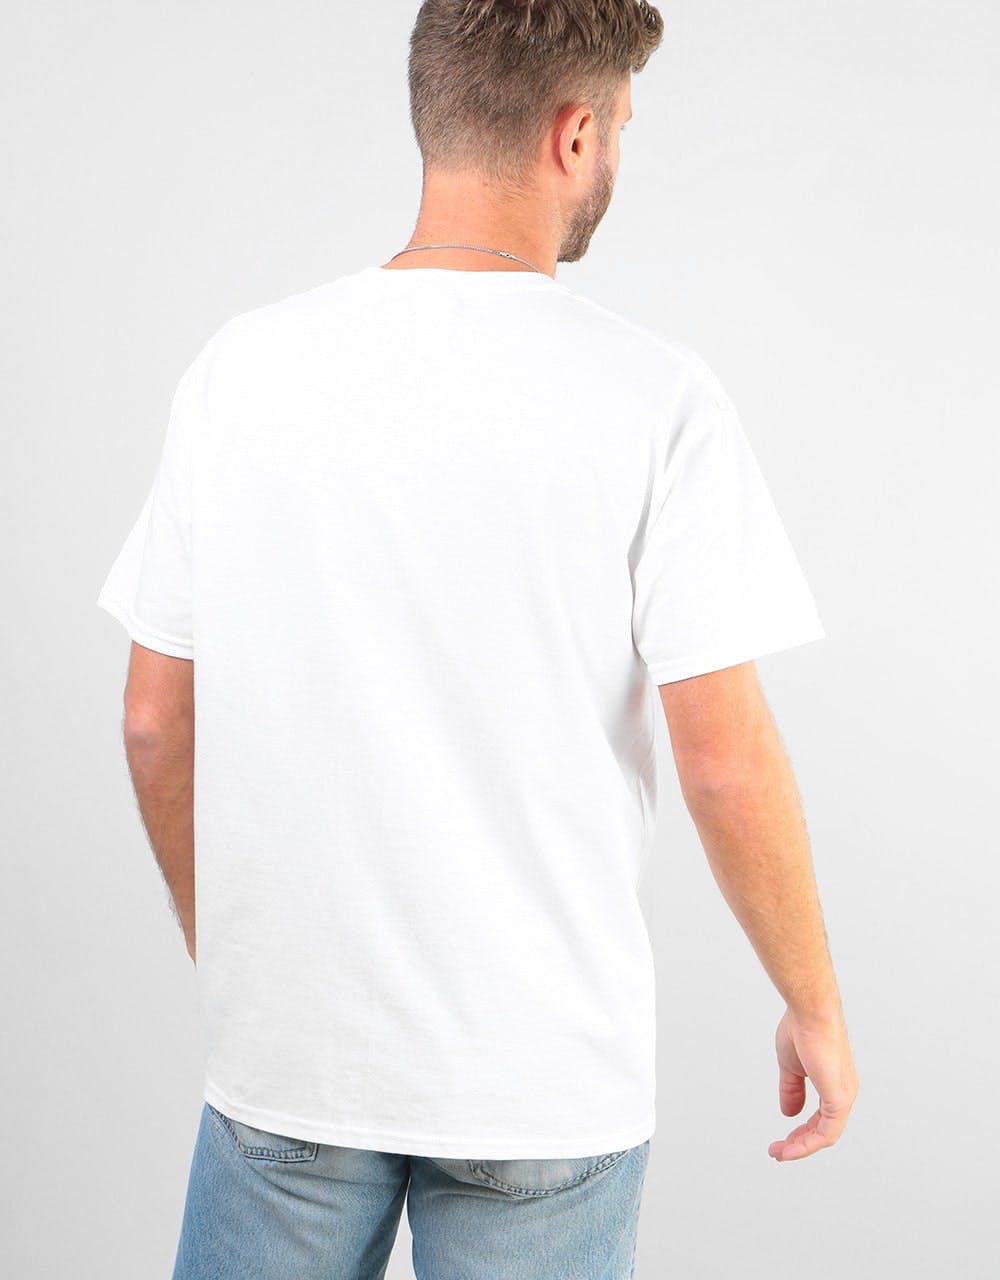 Route One Originals T-Shirt - White